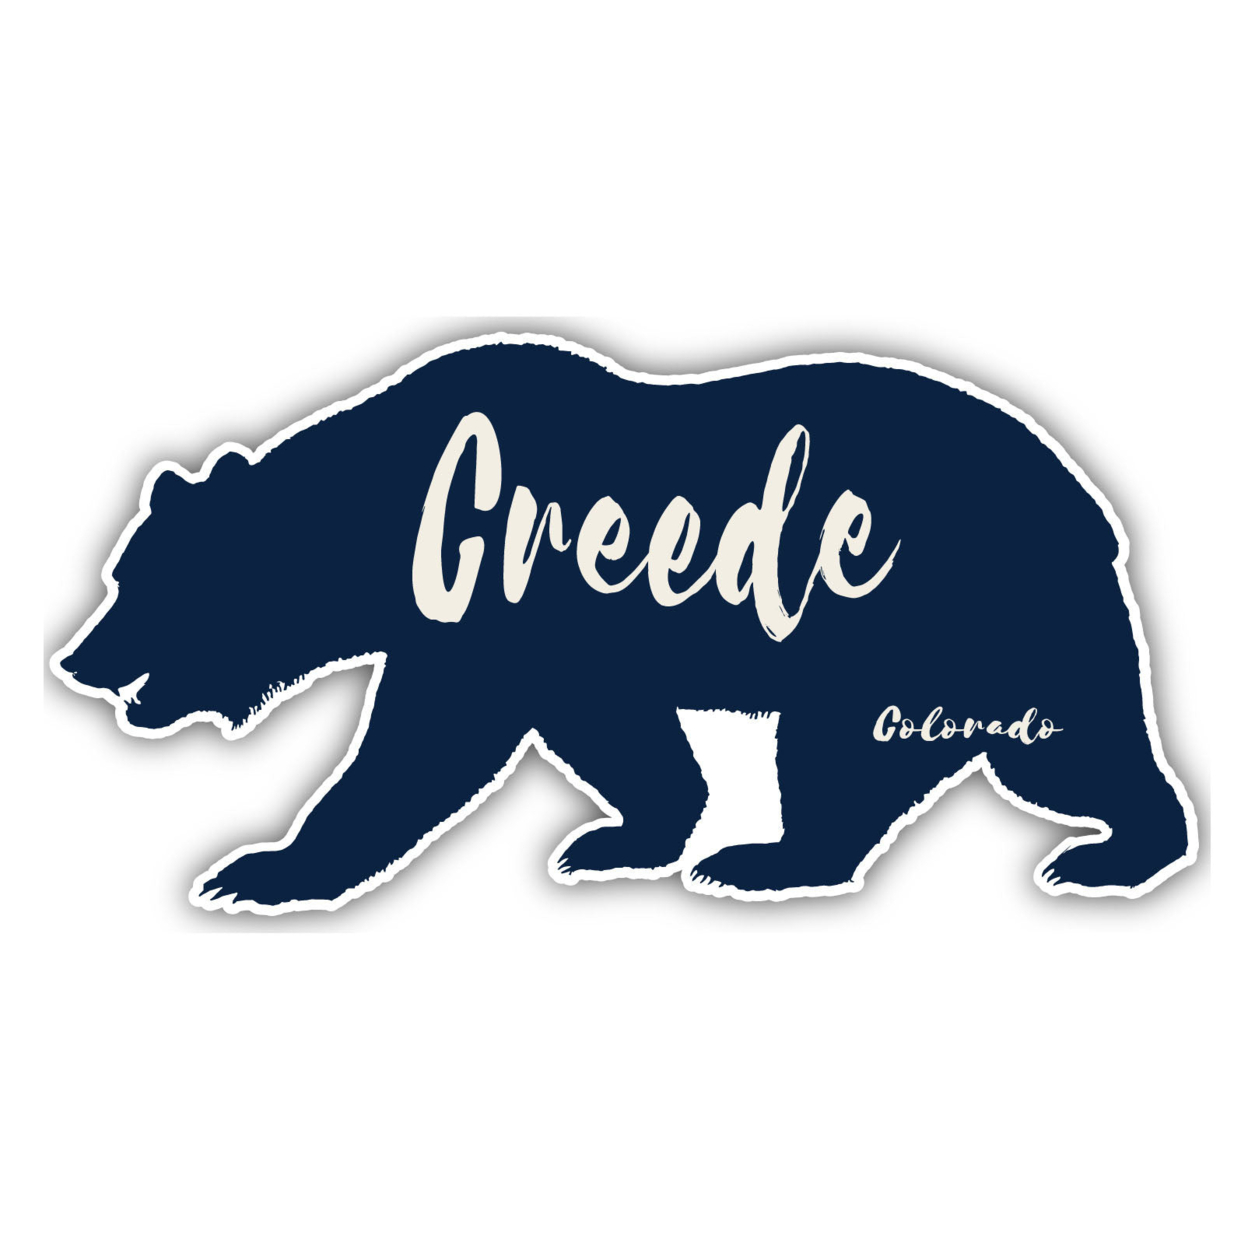 Creede Colorado Souvenir Decorative Stickers (Choose Theme And Size) - Single Unit, 4-Inch, Camp Life